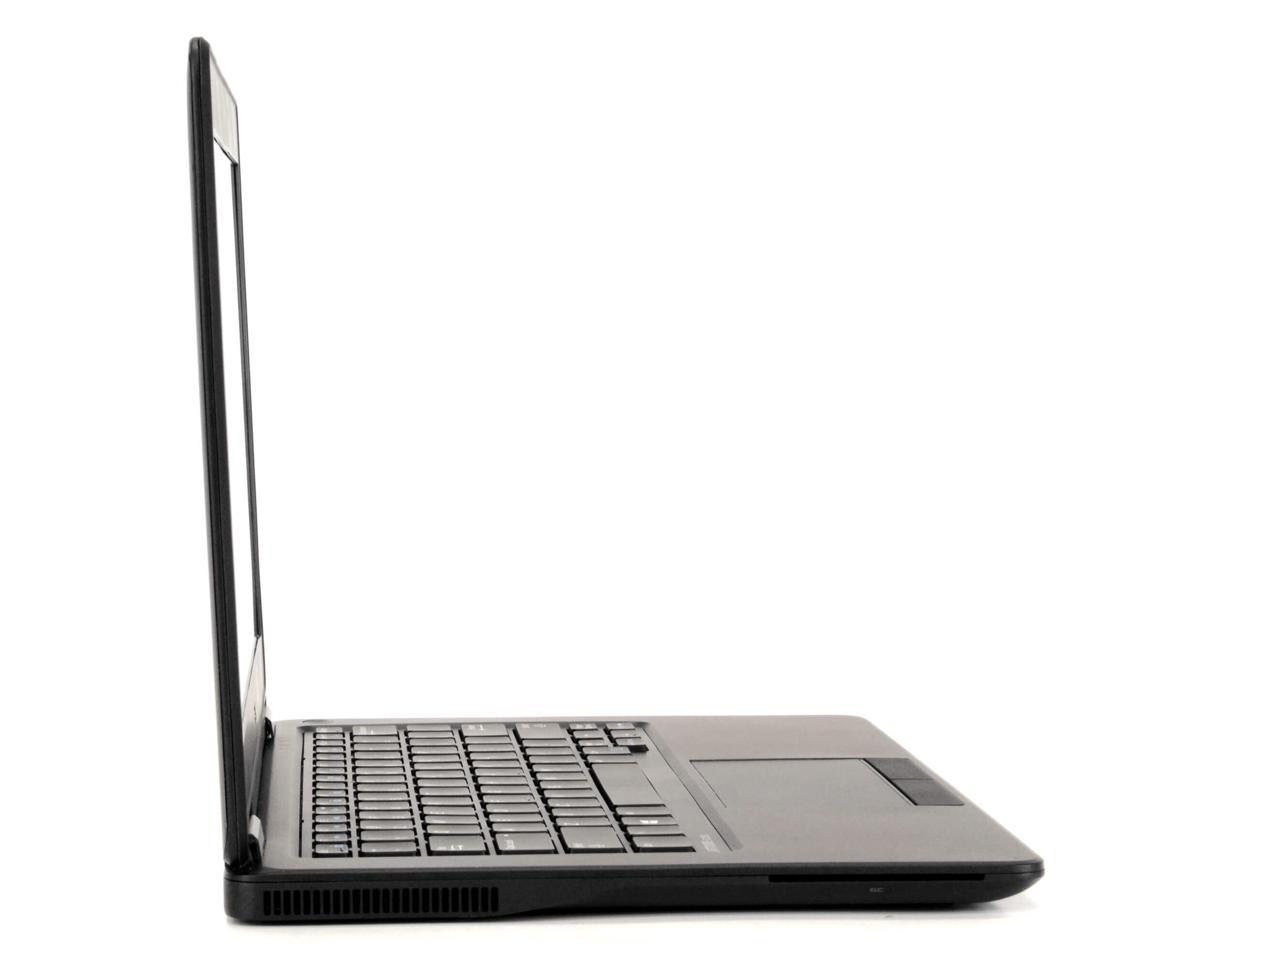 Dell Latitude E7250 Laptop Computer, 2.90 GHz Intel i7 Dual Core Gen 5, 8GB DDR3 RAM, 256GB SSD Hard Drive, Windows 10 Professional 64 Bit, 12" Screen